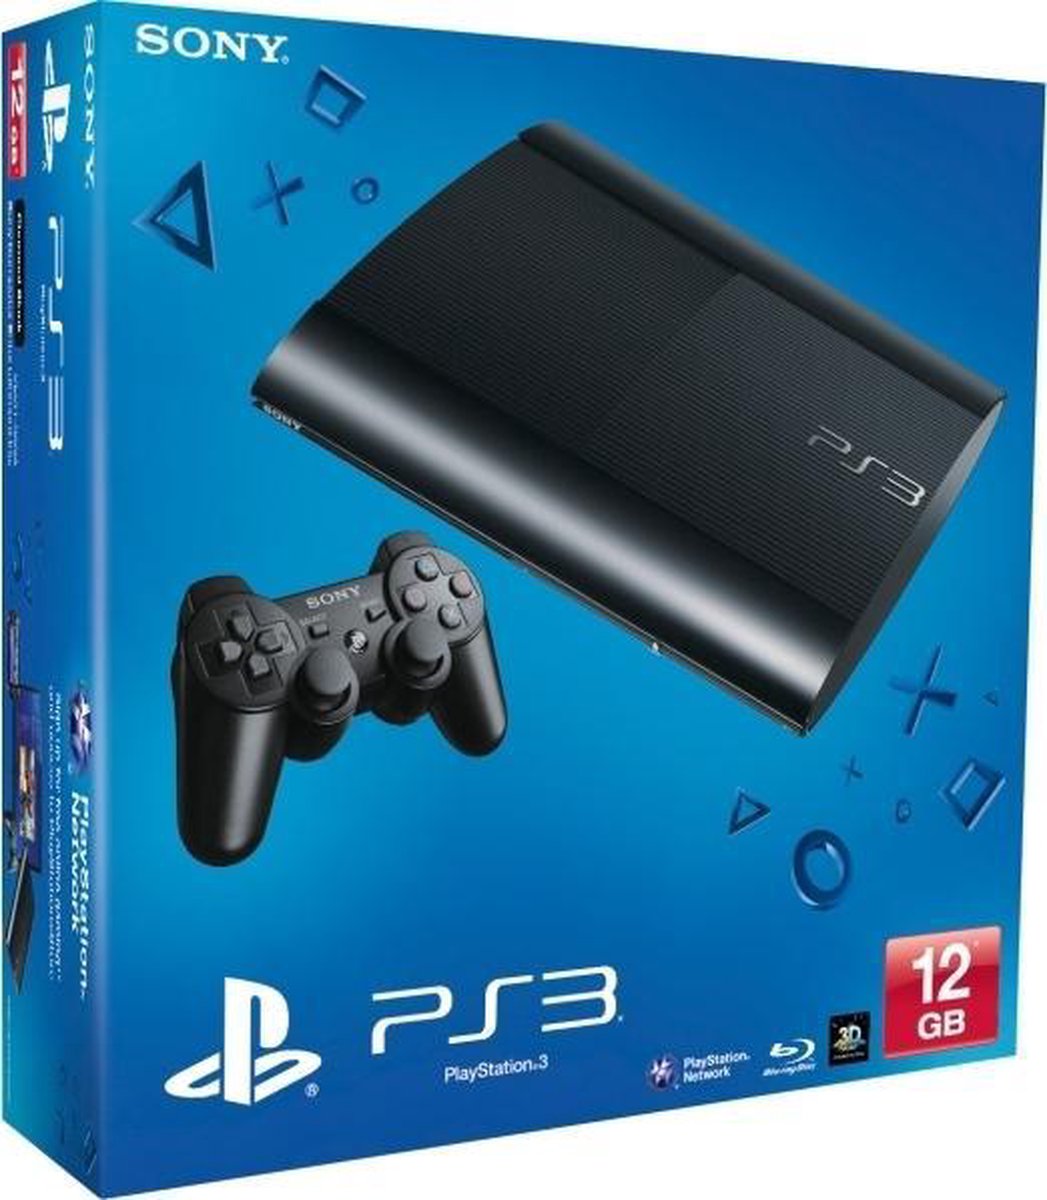 Carrière deze Chemicus Sony PlayStation 3 Super Slim Console - 12GB - Zwart - PS3 | bol.com